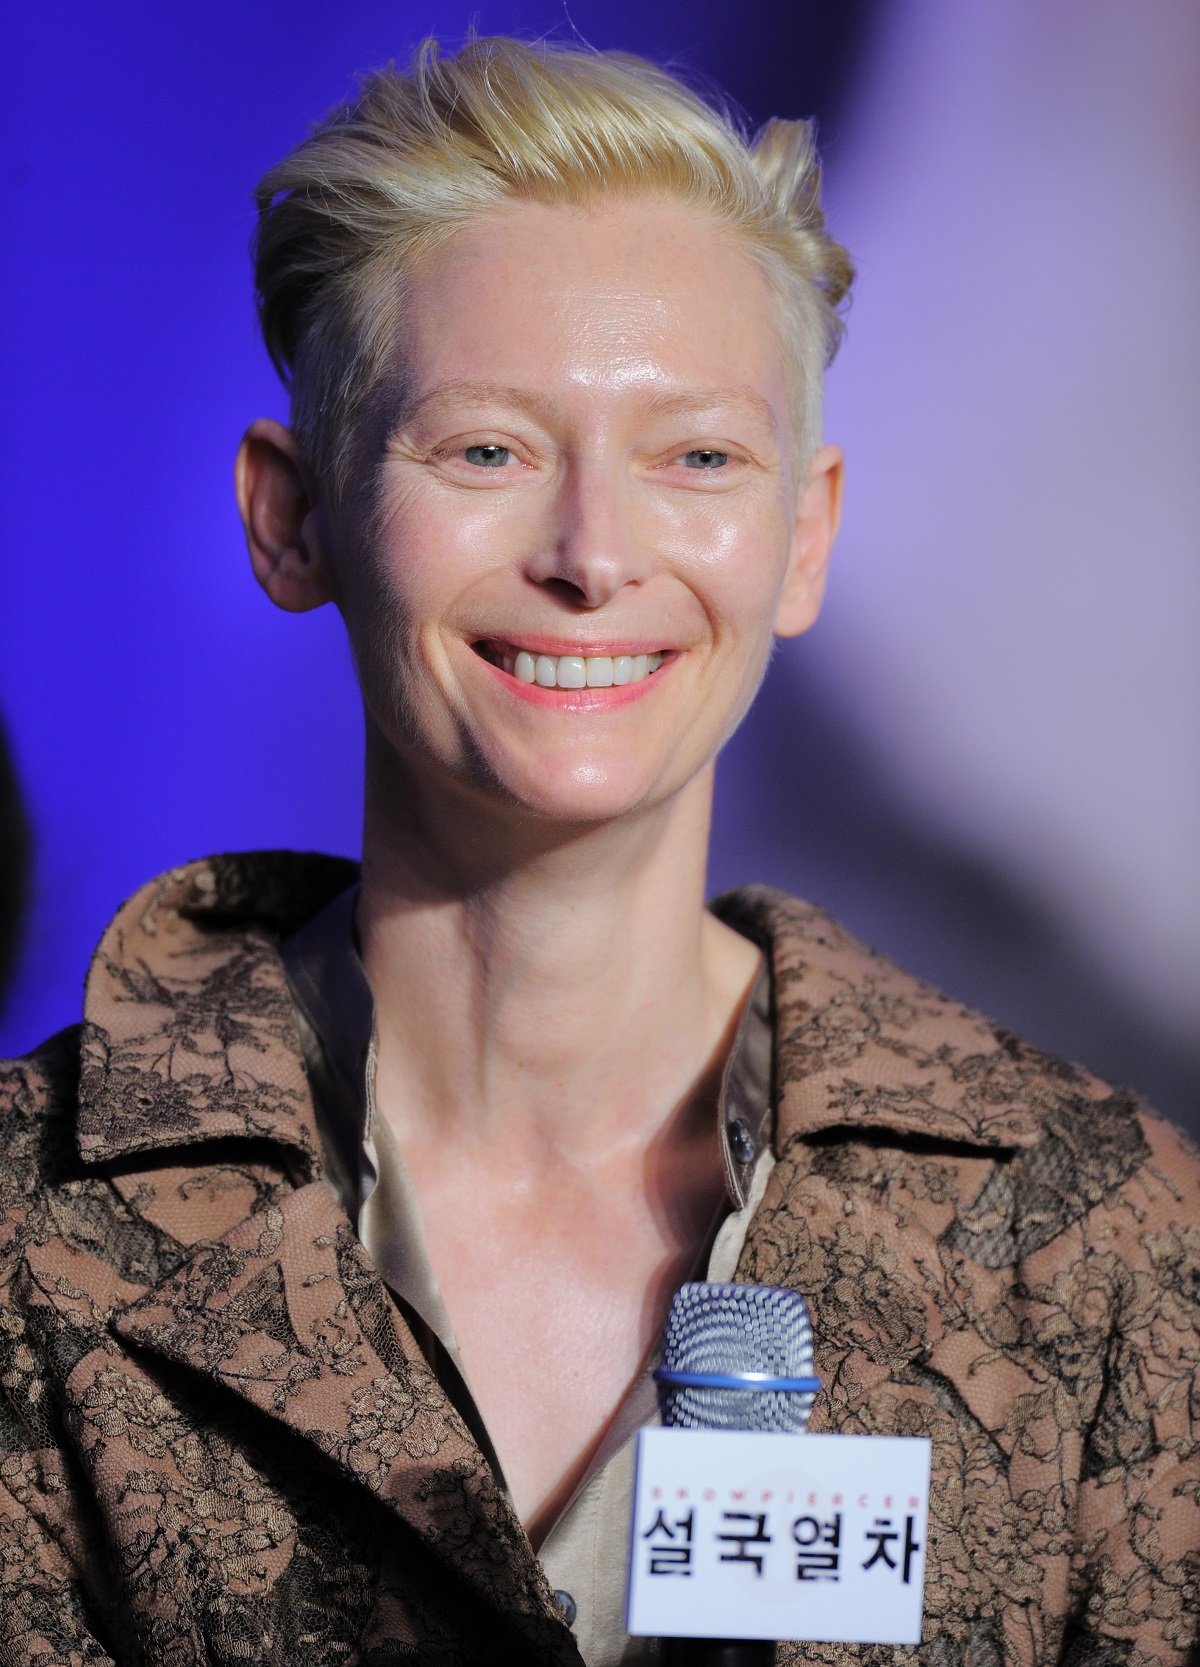 Tilda Swinton at the 'Snowpiercer' press conference in 2013 